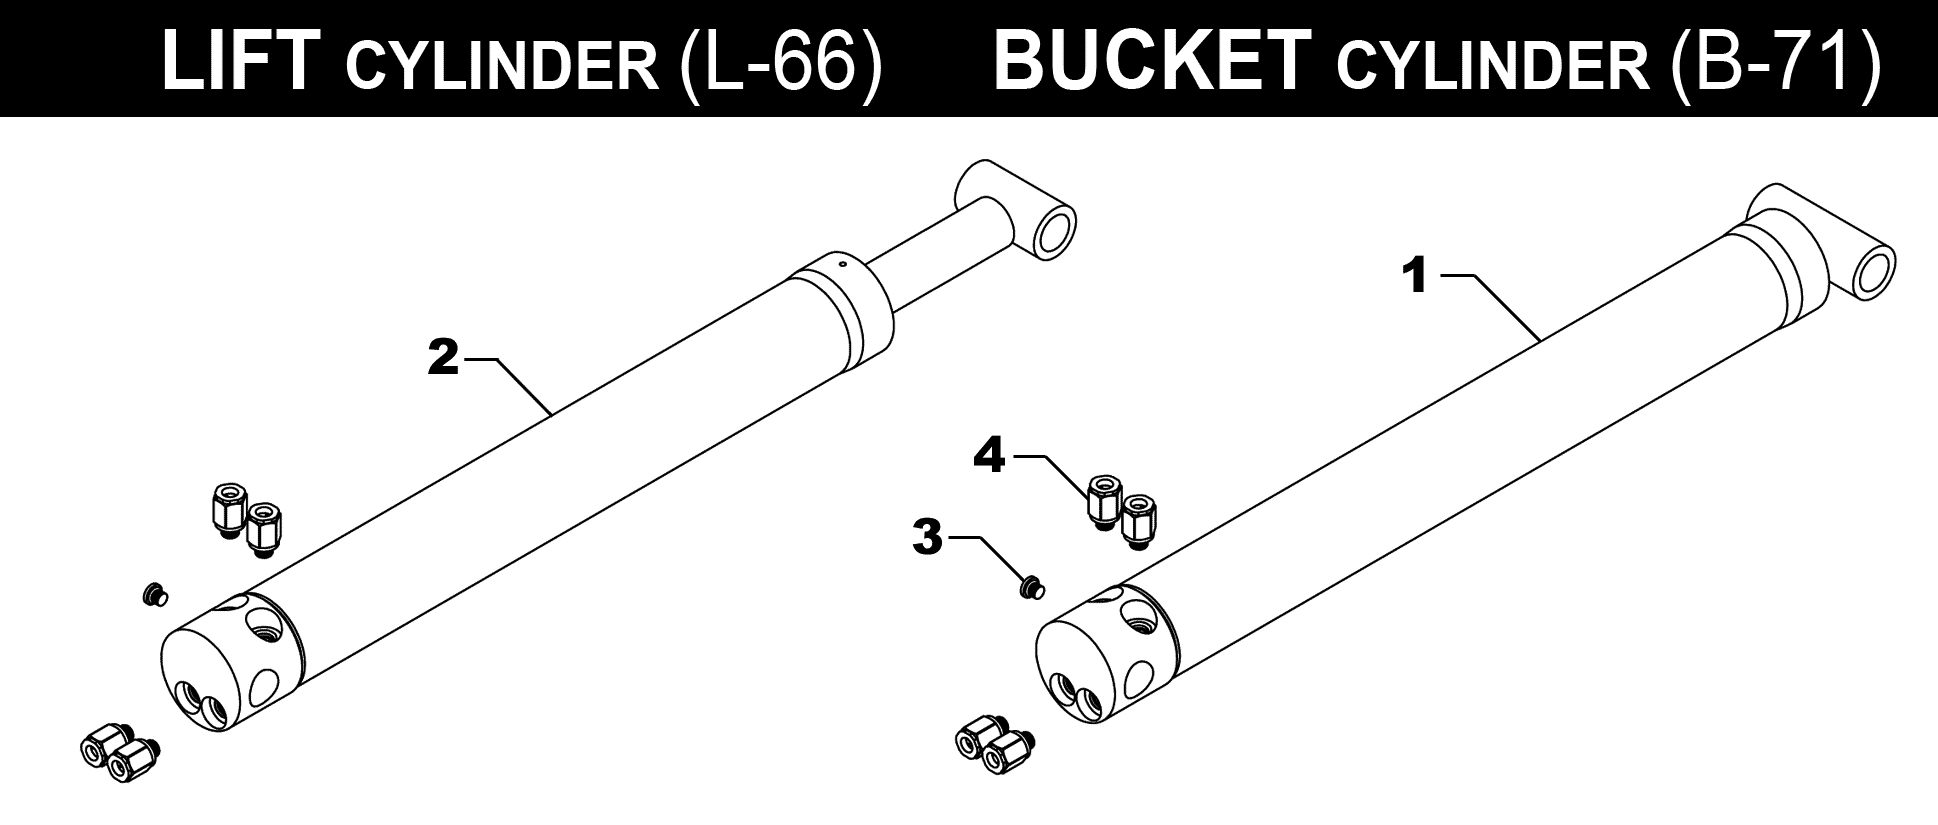 BUCKET & LIFT CYLINDERS  (B-71 & L-66)